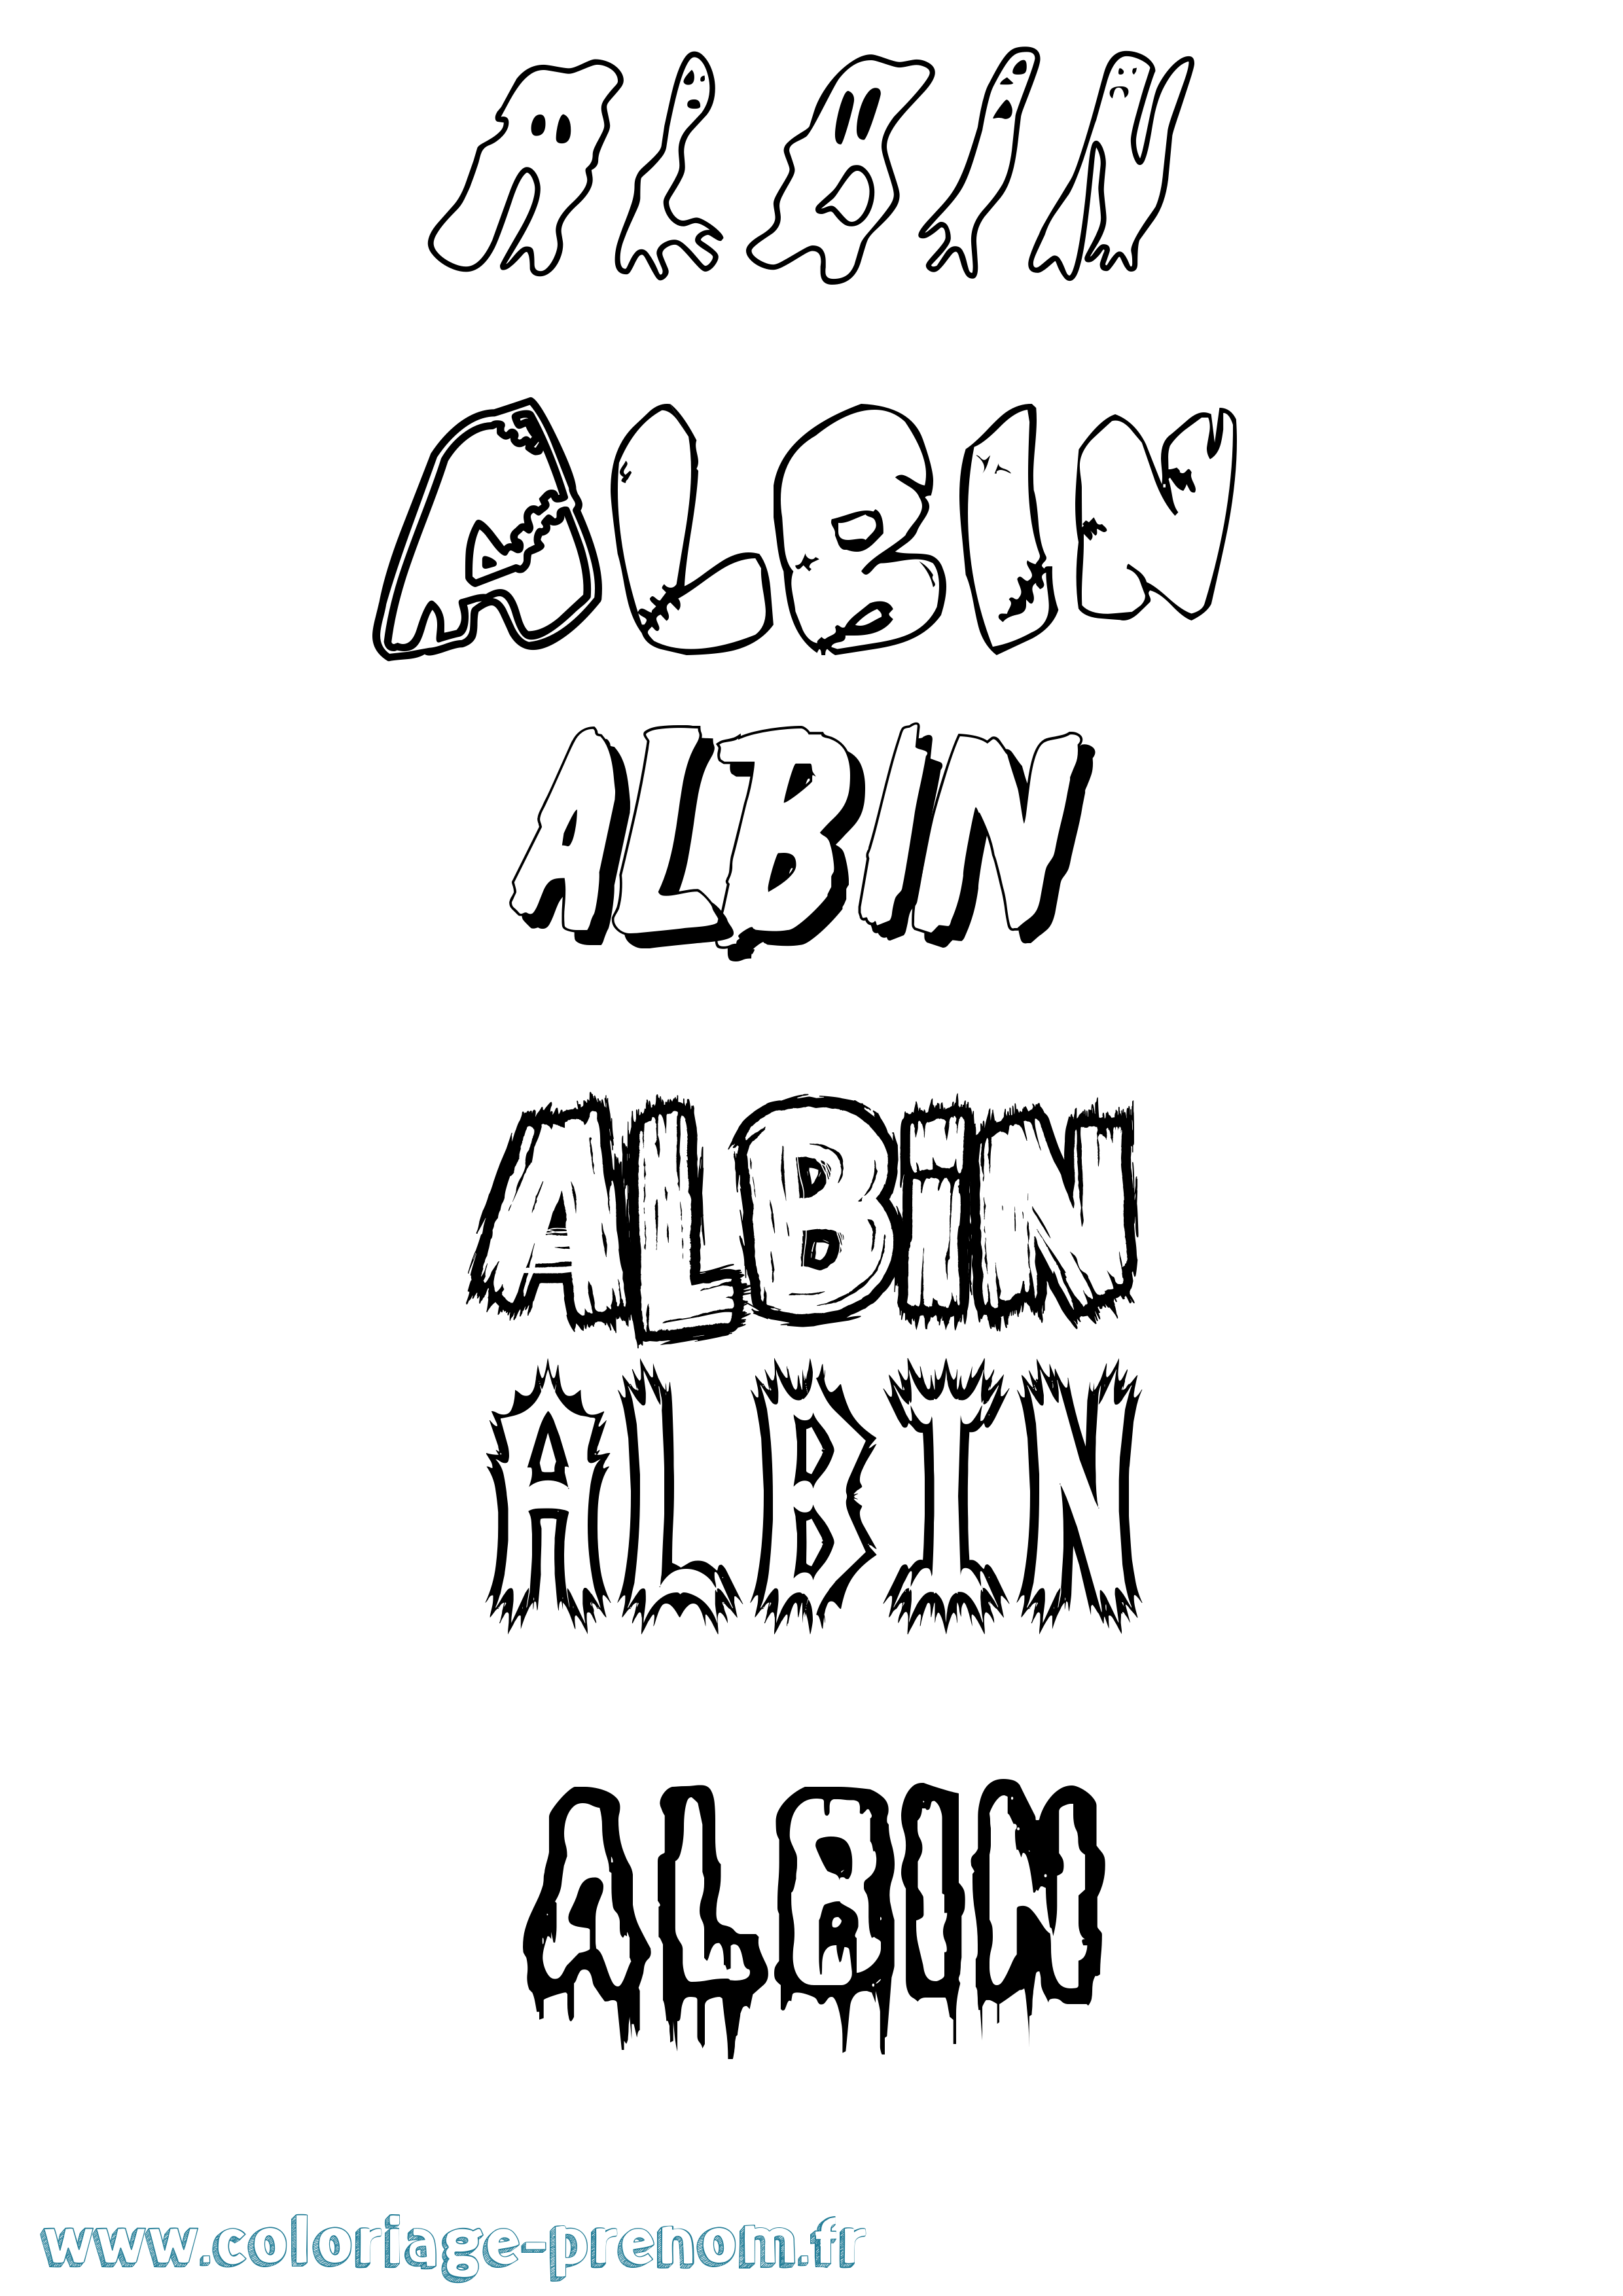 Coloriage prénom Albin Frisson